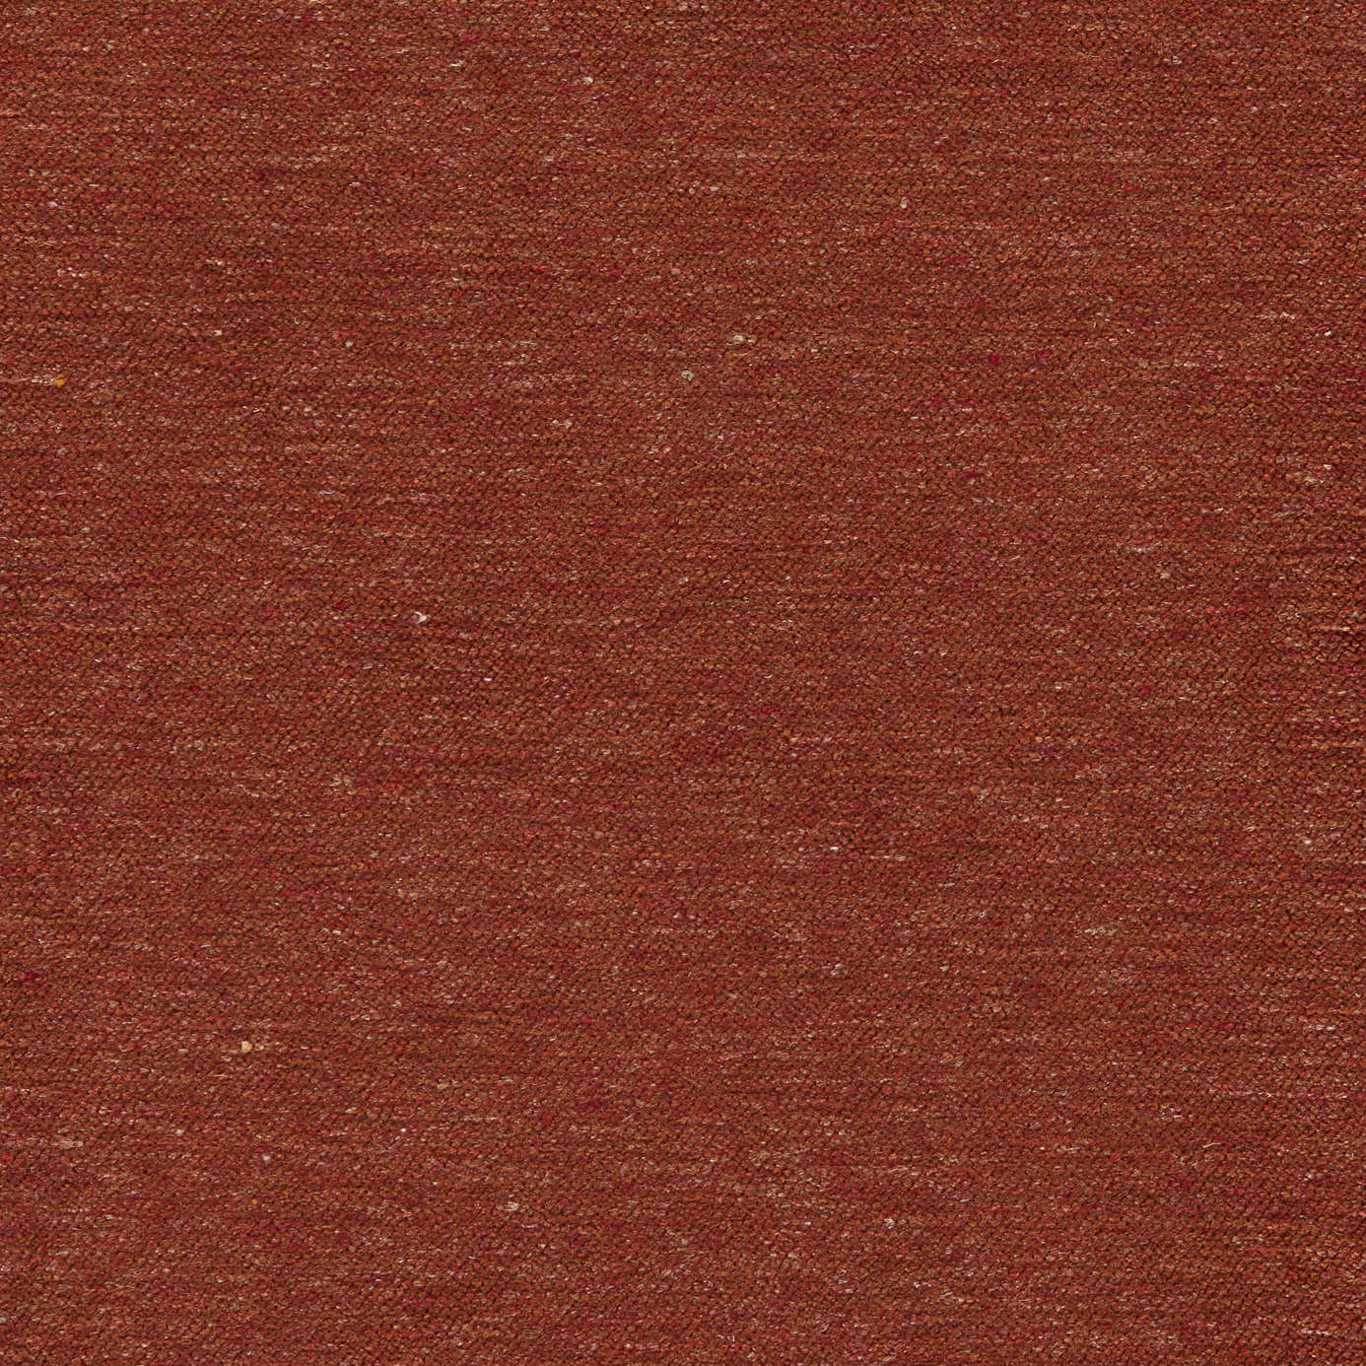 Dearle Fabric by Morris & Co. - DM4U236531 - Rust